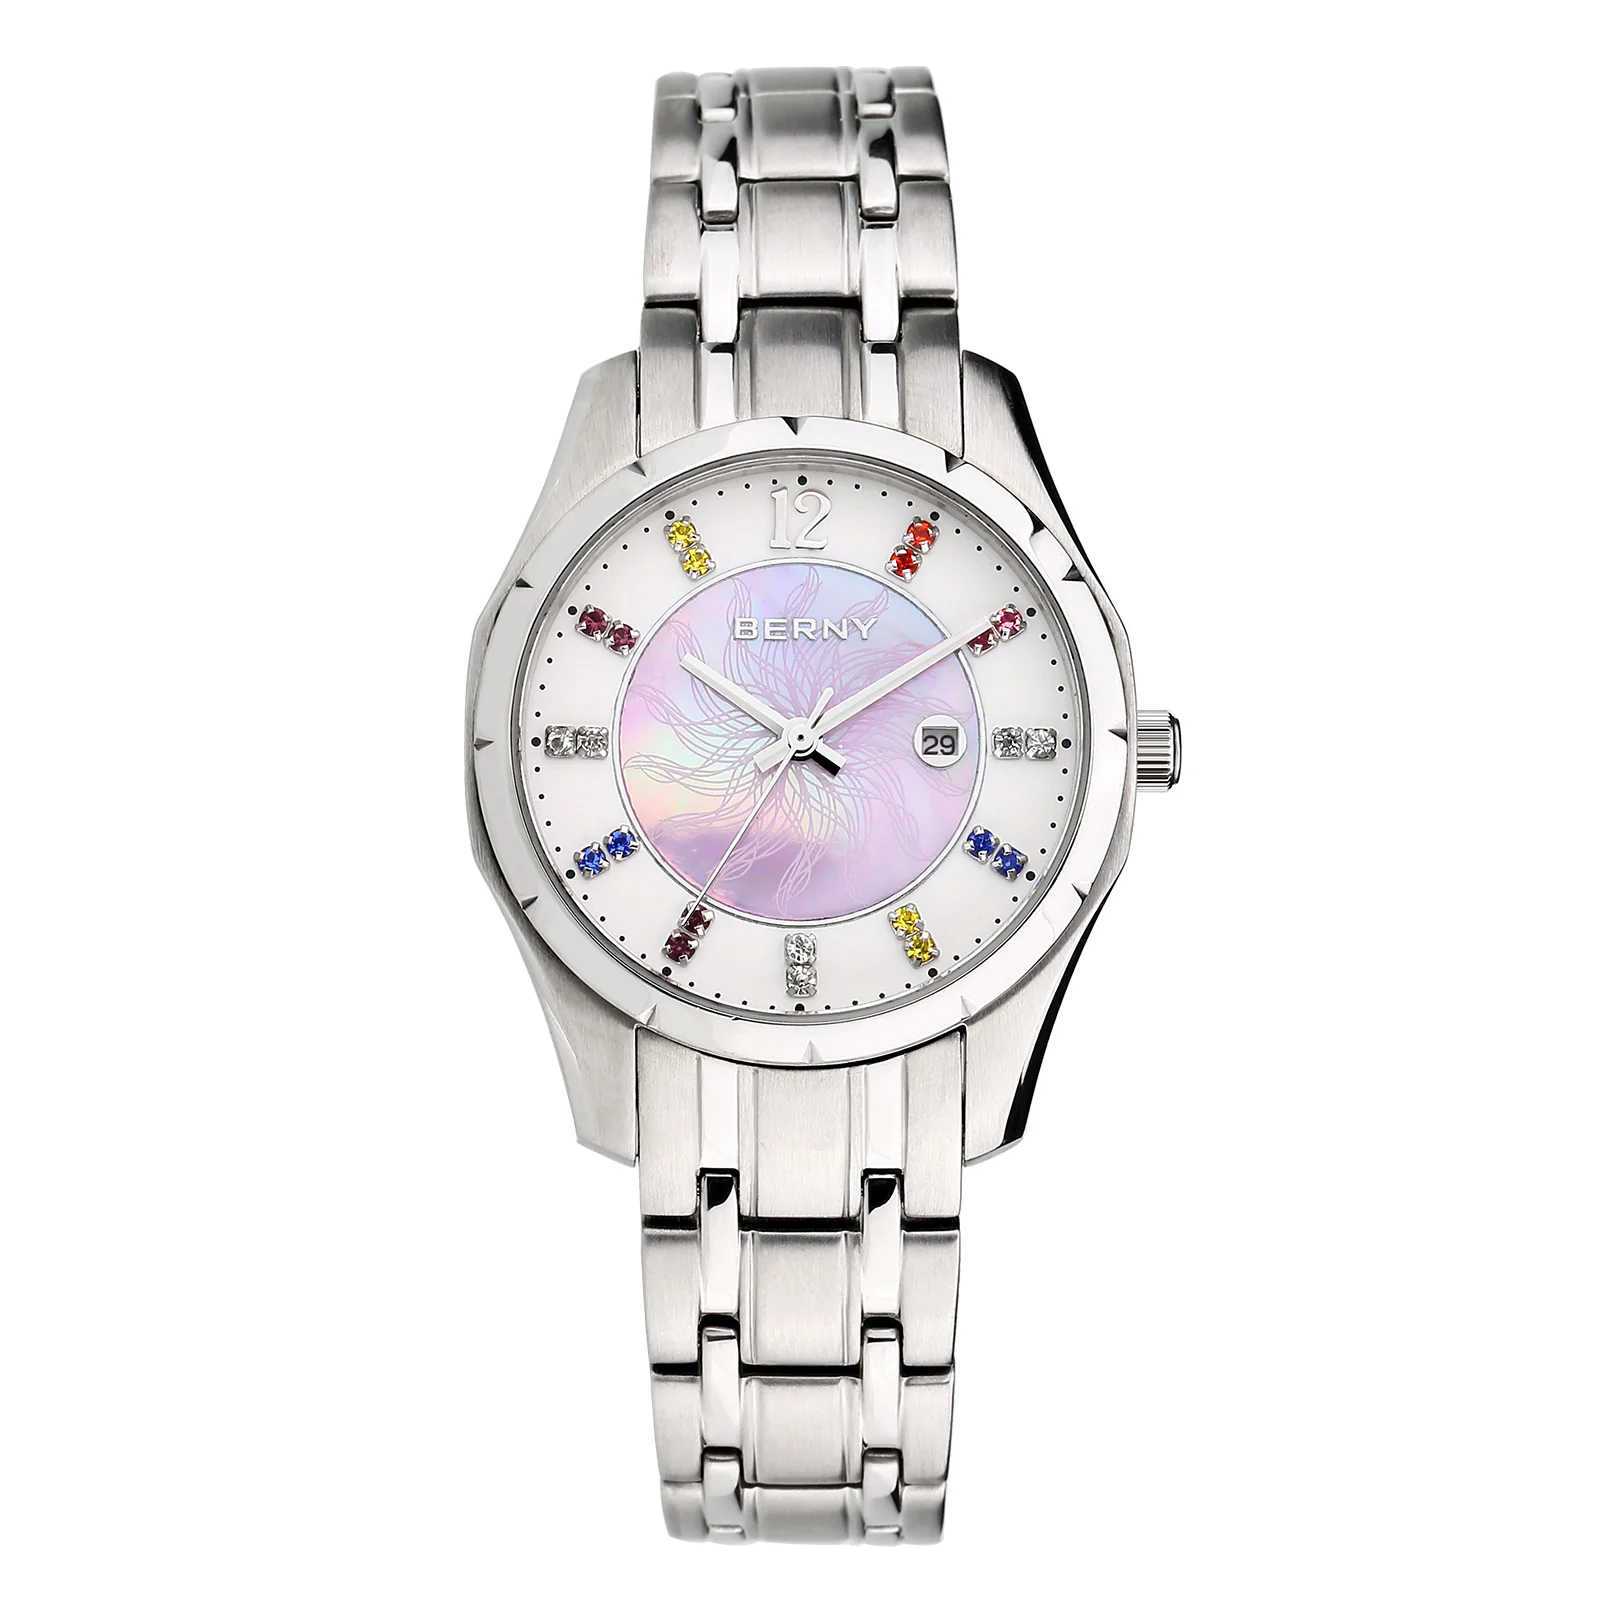 BERNY Quartz Women watch Colorful Dial Watch Fashion Casual Diamond Watch 100%Stainless Steel Ladies Clock 3ATM Waterproof Watch